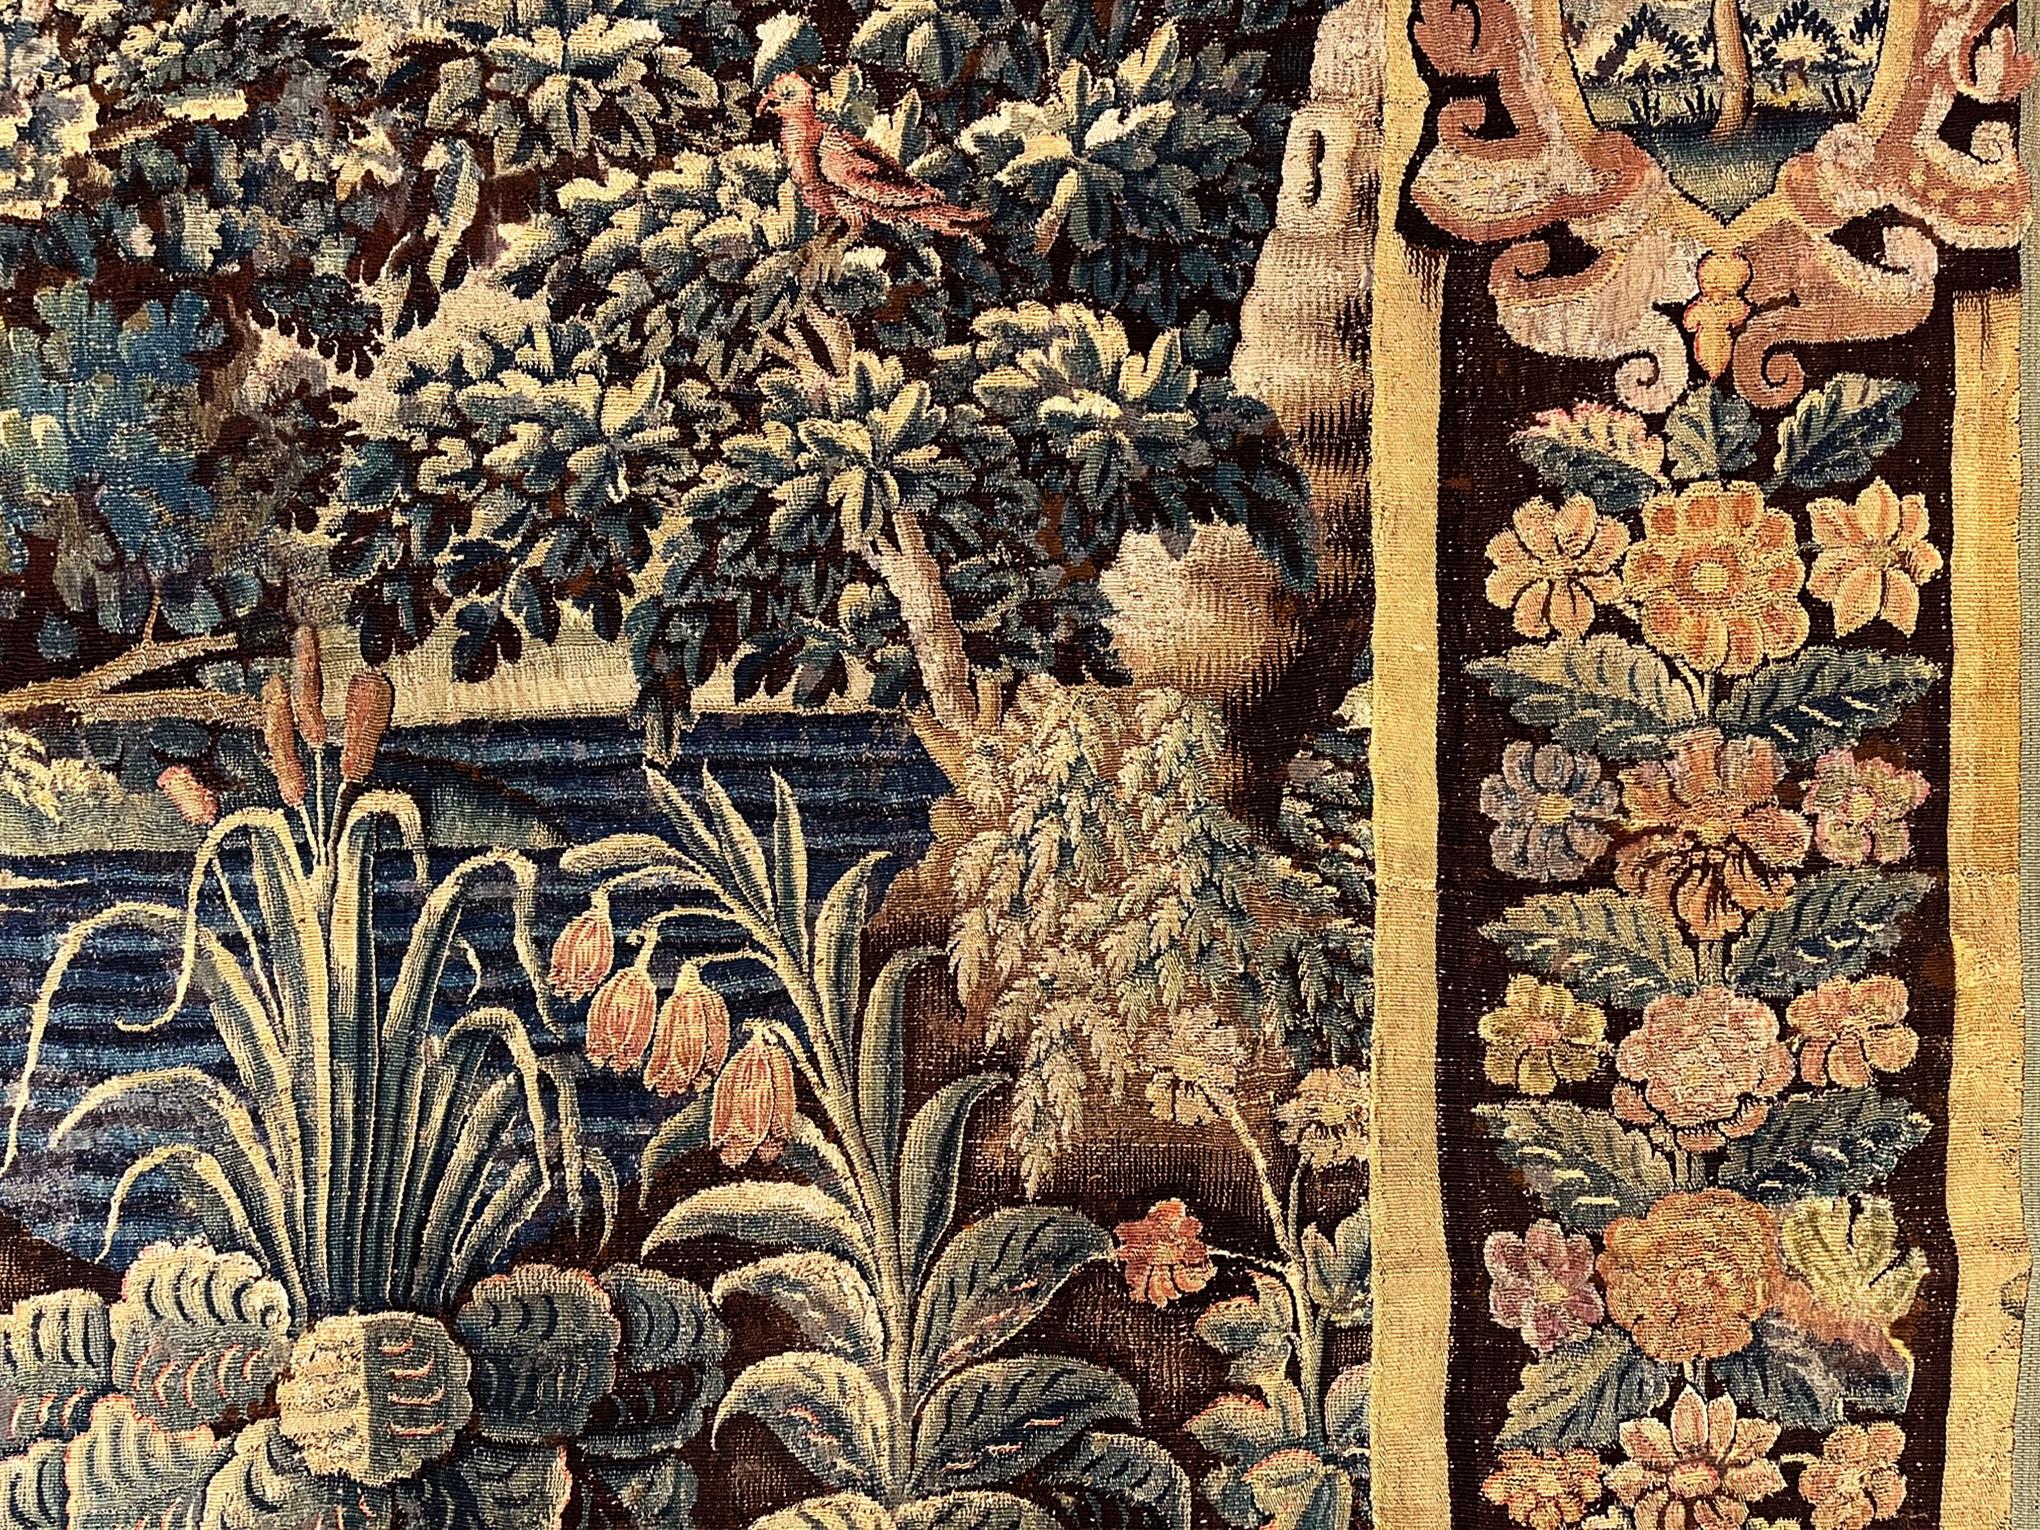 17th Century Flemish Verdure Landscape Tapestry, a Lush Forest & Pendant Border For Sale 1